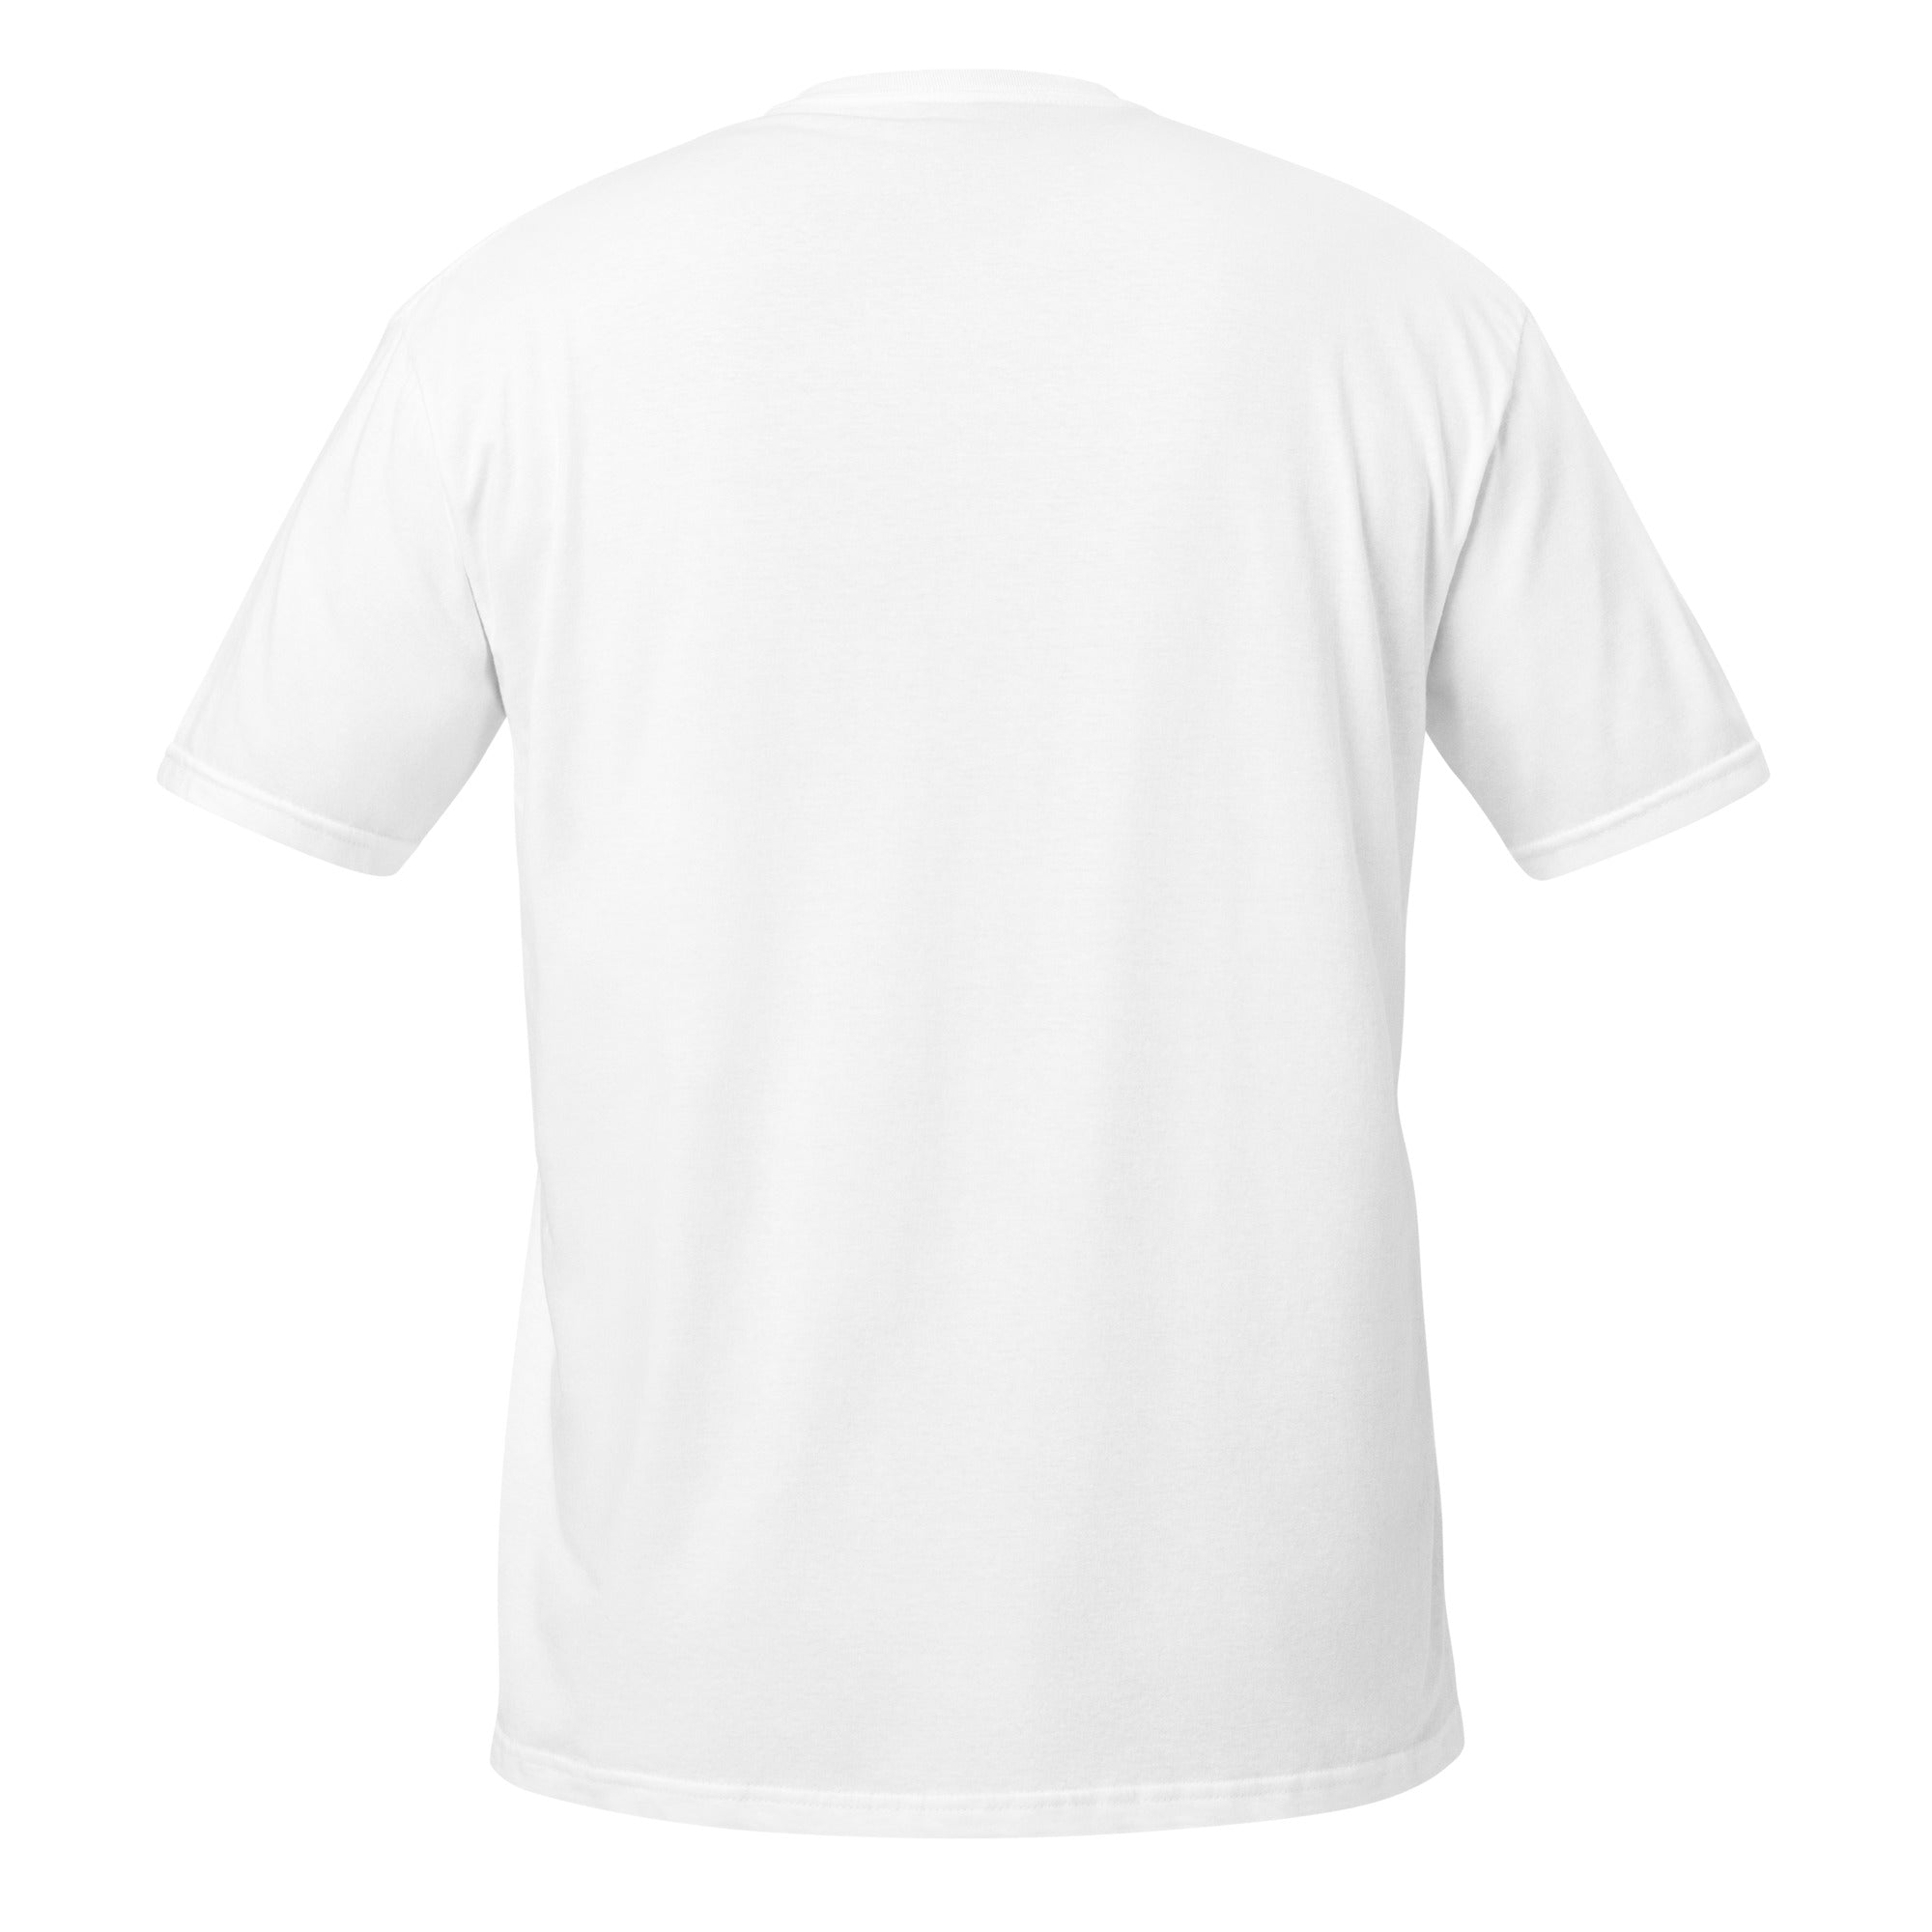 Short-Sleeve Unisex T-Shirt- Kiss me I'm gay